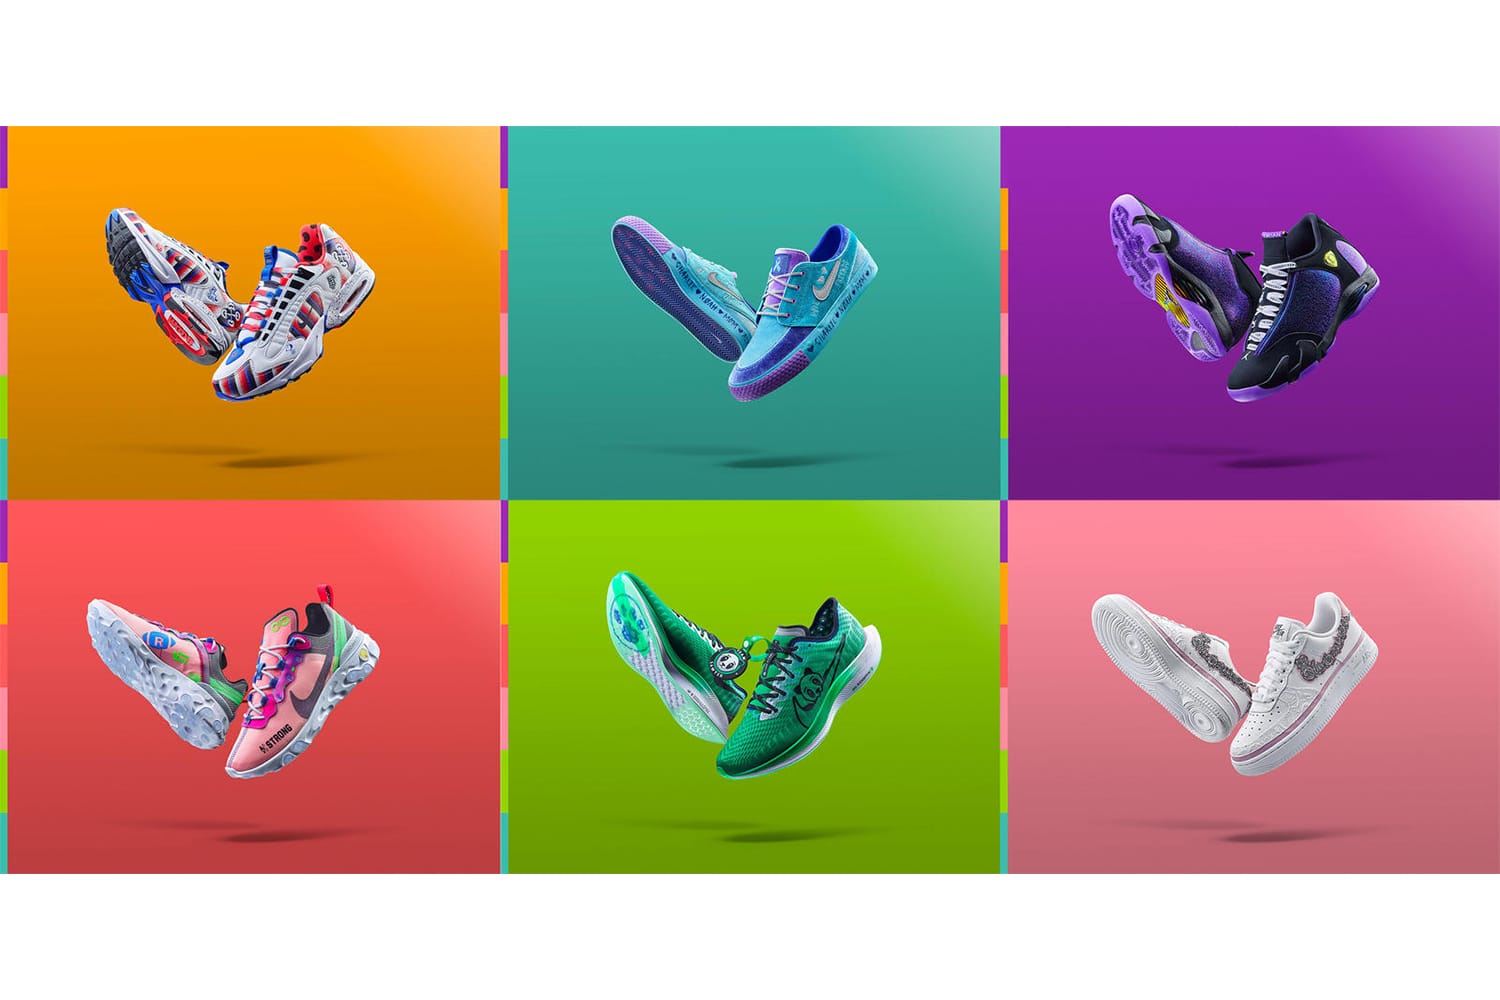 Nike Air Jordan 14 kopen